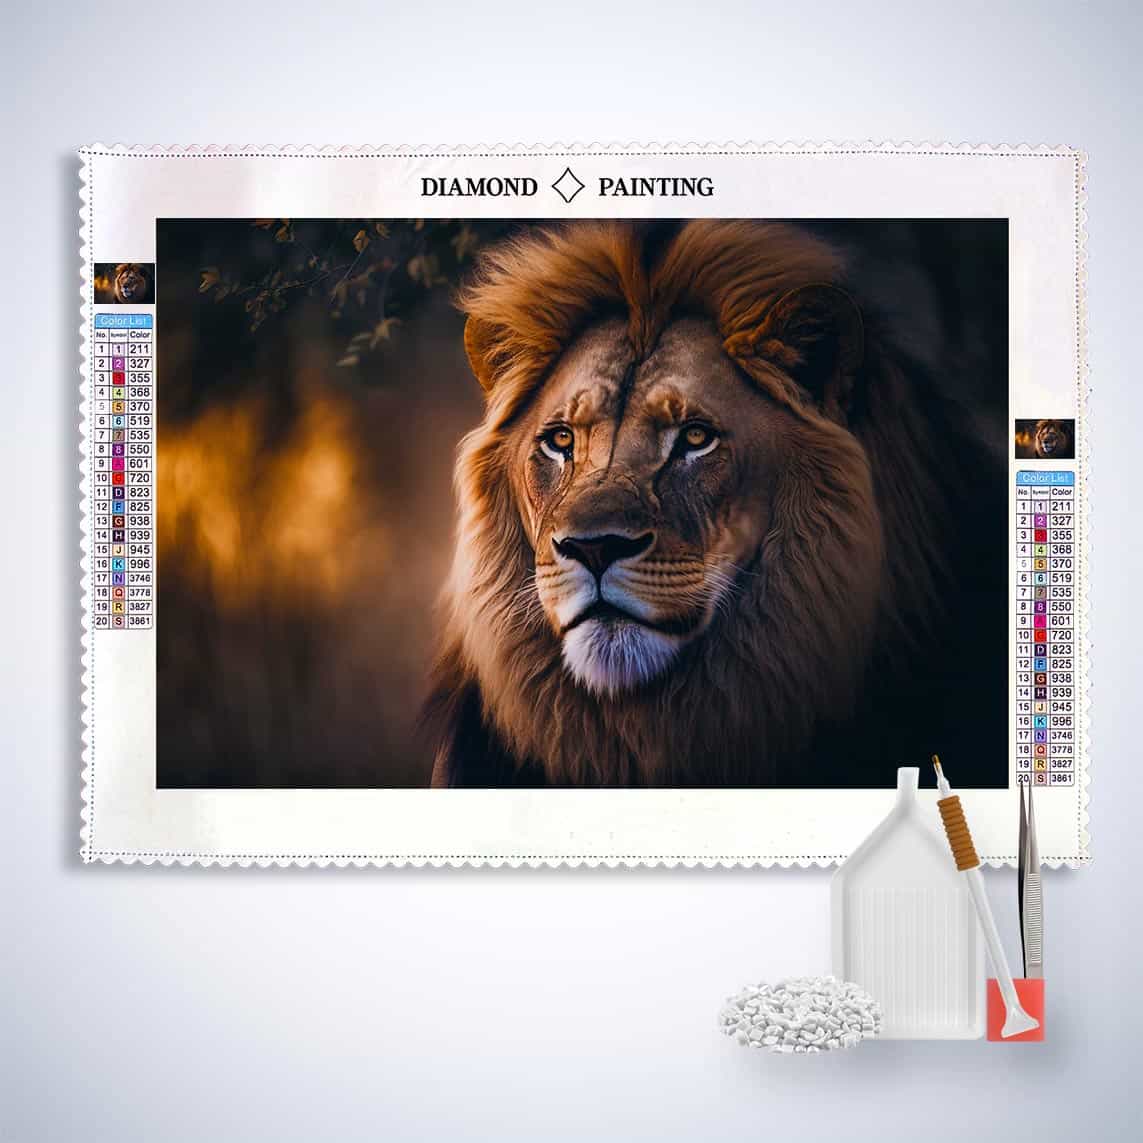 Diamond Painting - Beeindruckender Löwe - gedruckt in Ultra-HD - Horizontal, Löwe, Tiere